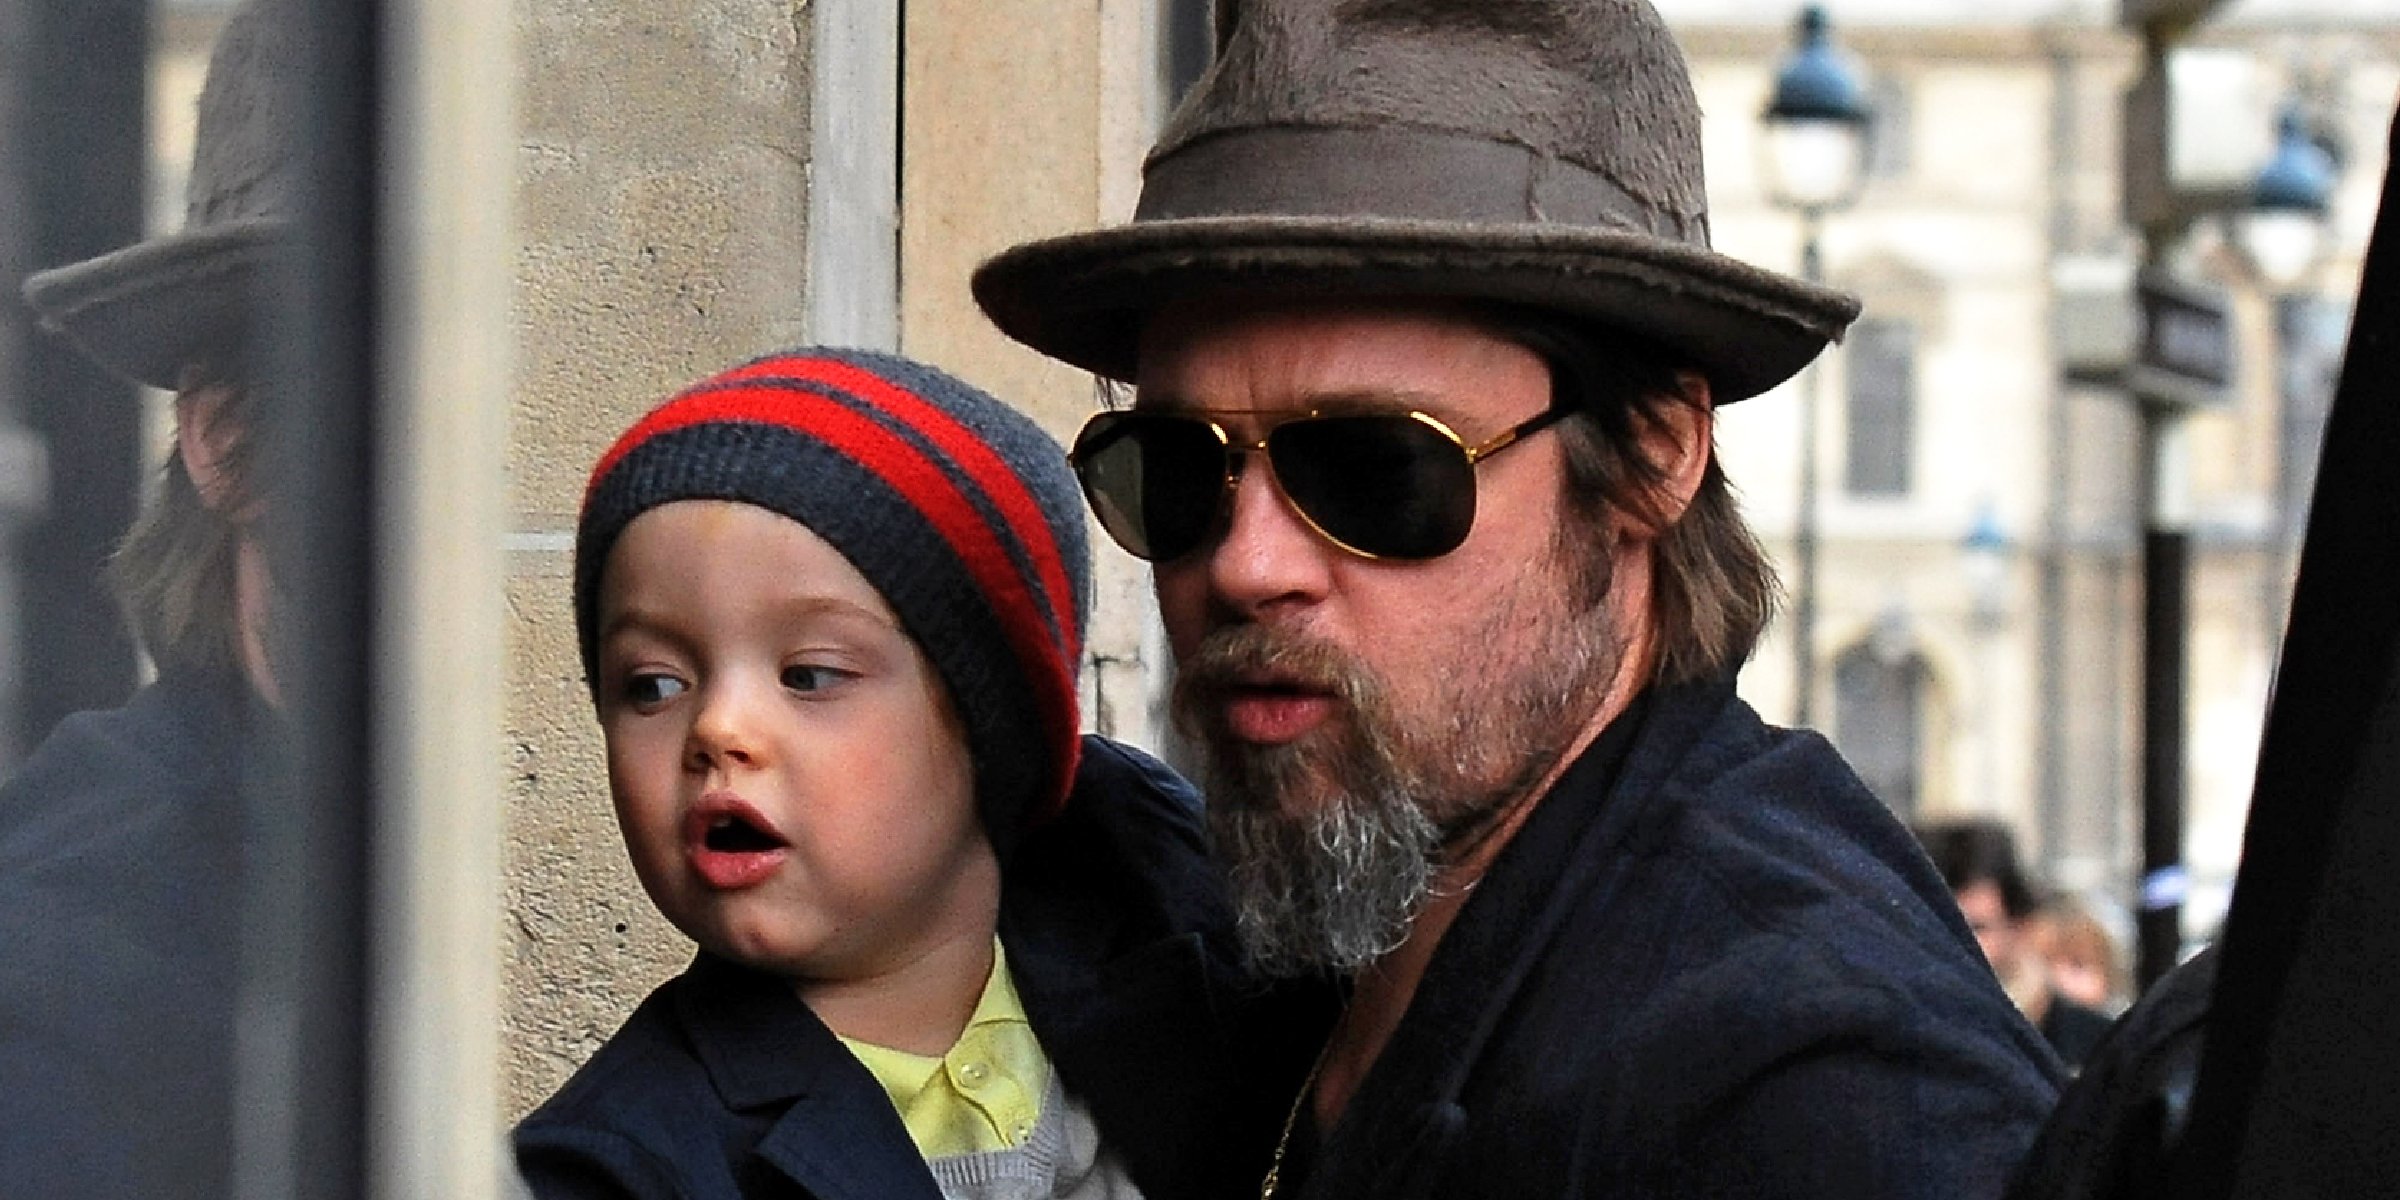 Shiloh Jolie-Pitt and Brad Pitt, 2010 | Source: Getty Images